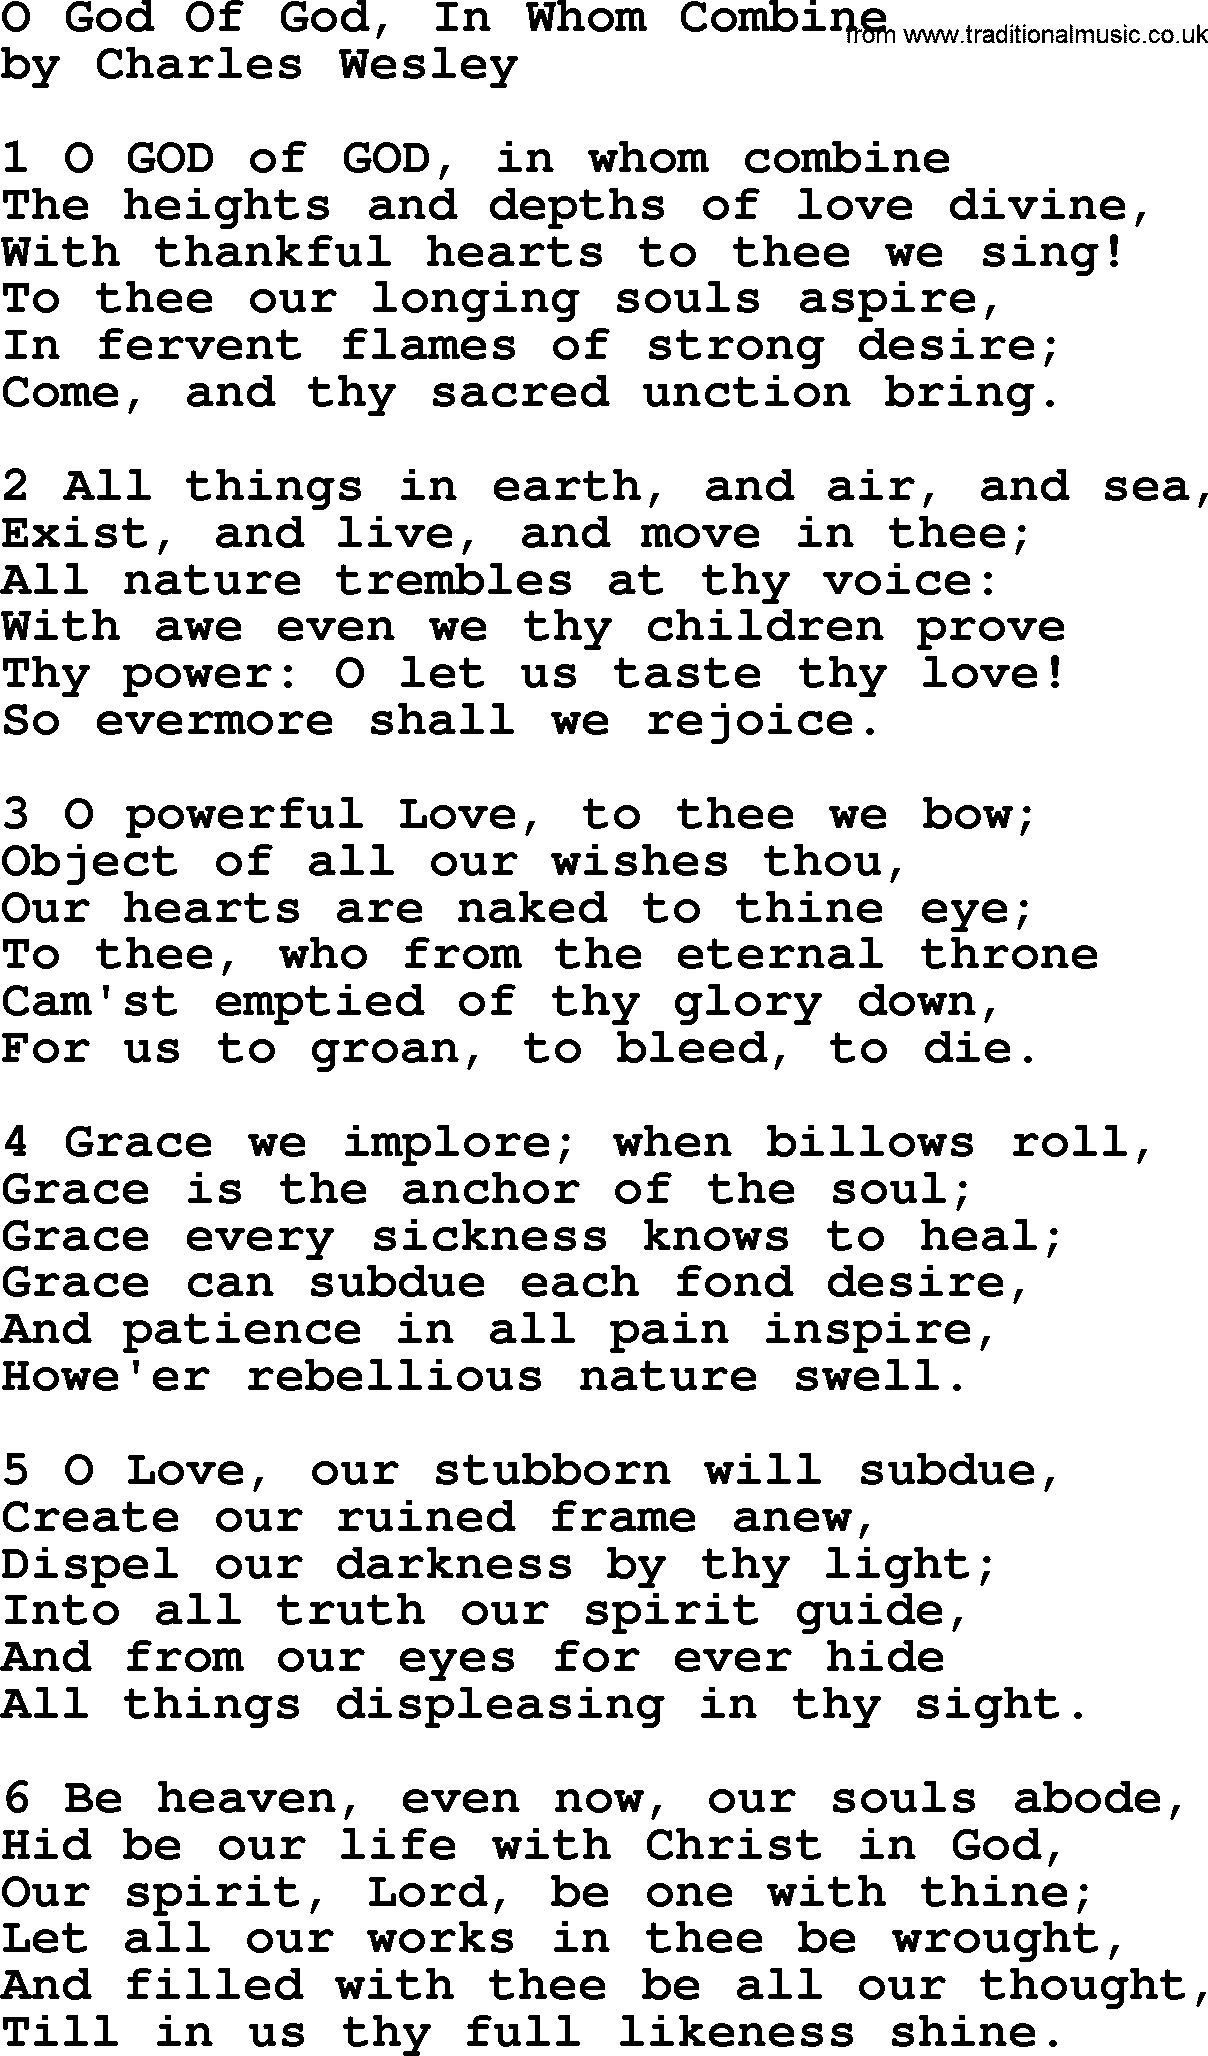 Charles Wesley hymn: O God Of God, In Whom Combine, lyrics